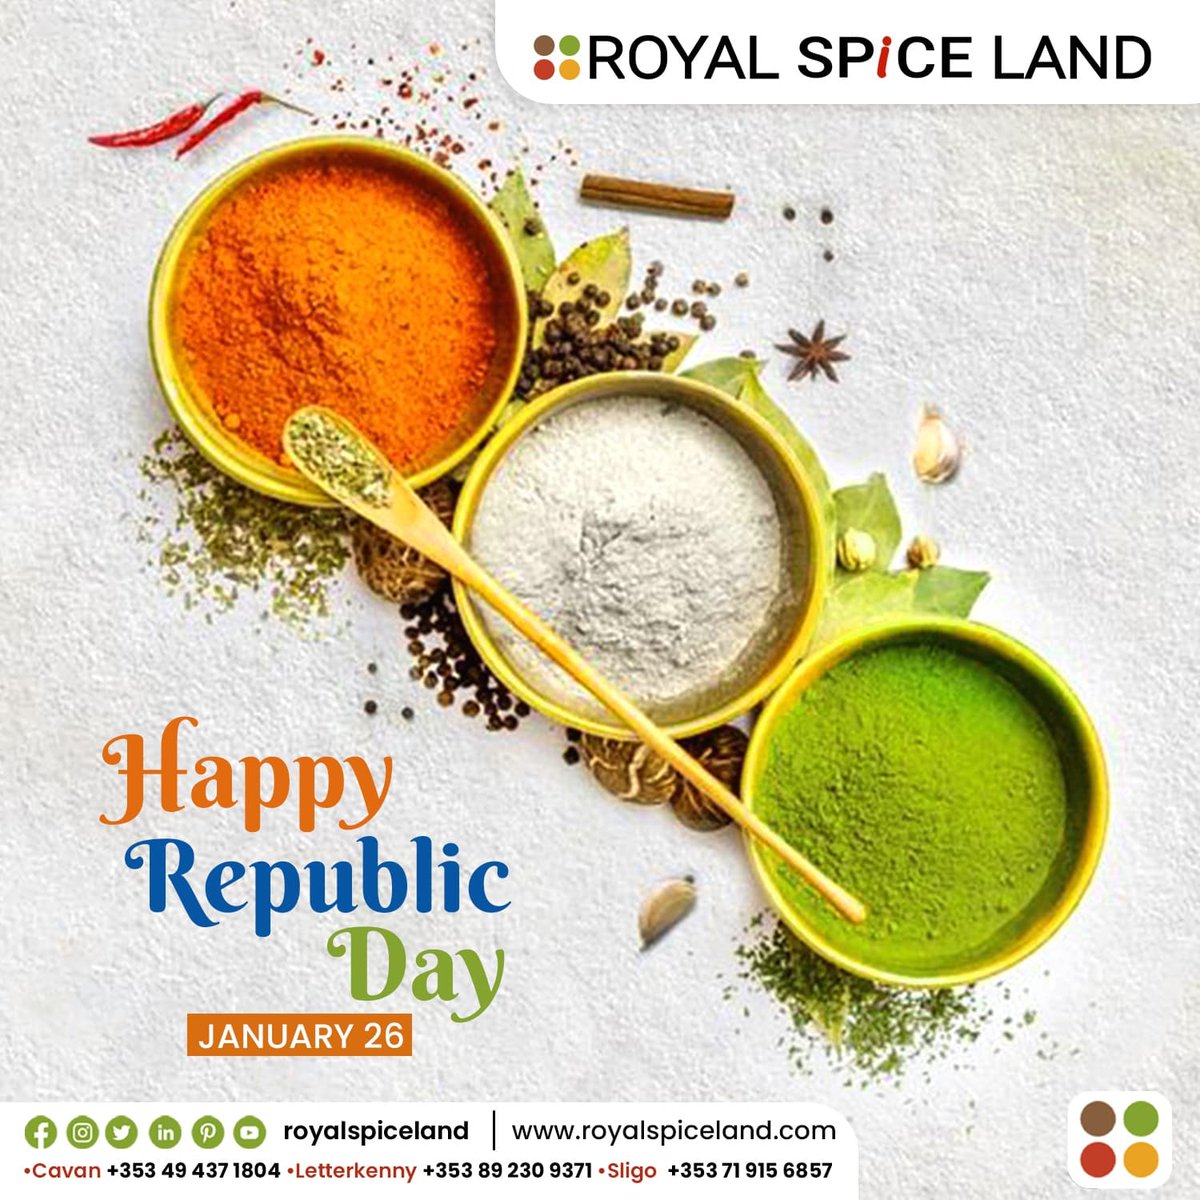 Let the tricolor feast begin
Happy Republic Day!
#royalspiceland #happyrepublicday #republicday #spices #spicestore